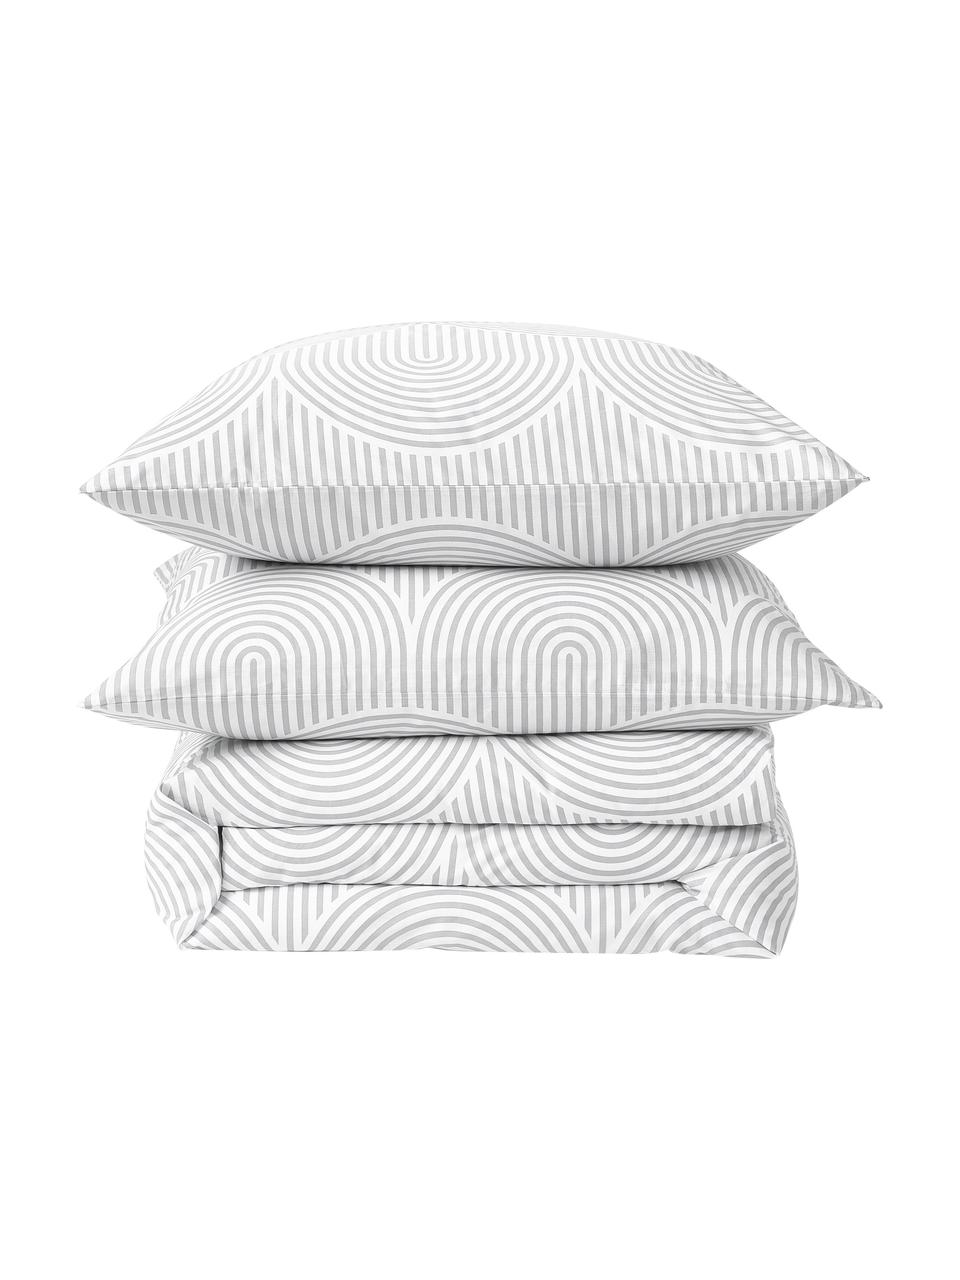 Baumwoll-Bettdeckenbezug Arcs, Webart: Renforcé Fadendichte 144 , Grau, Weiß, B 200 x L 200 cm